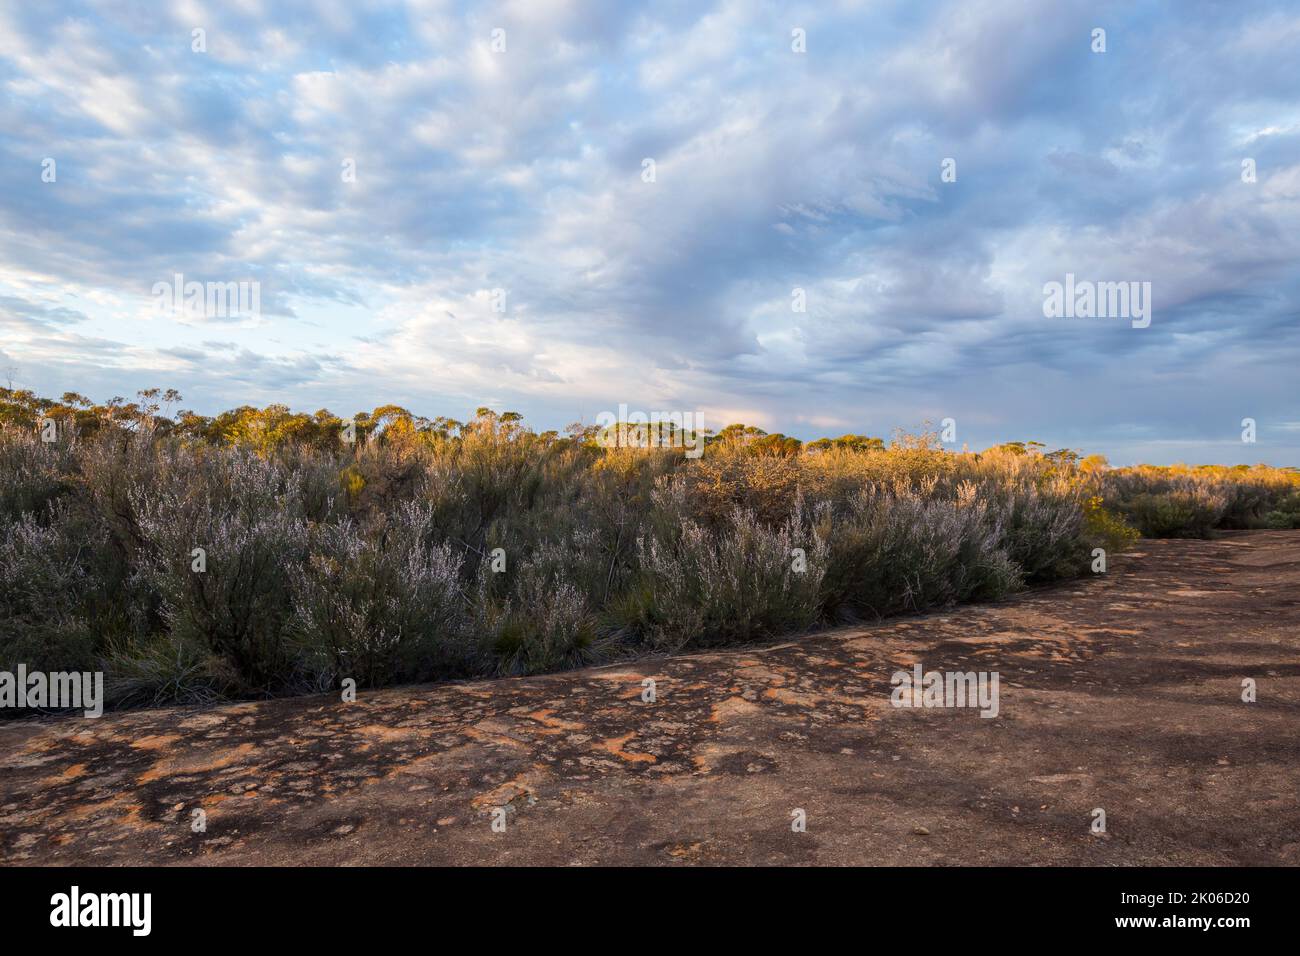 Early morning light on the flowering shrubs McDermid Rock, Hyden-Norseman Road Western Australia Stock Photo